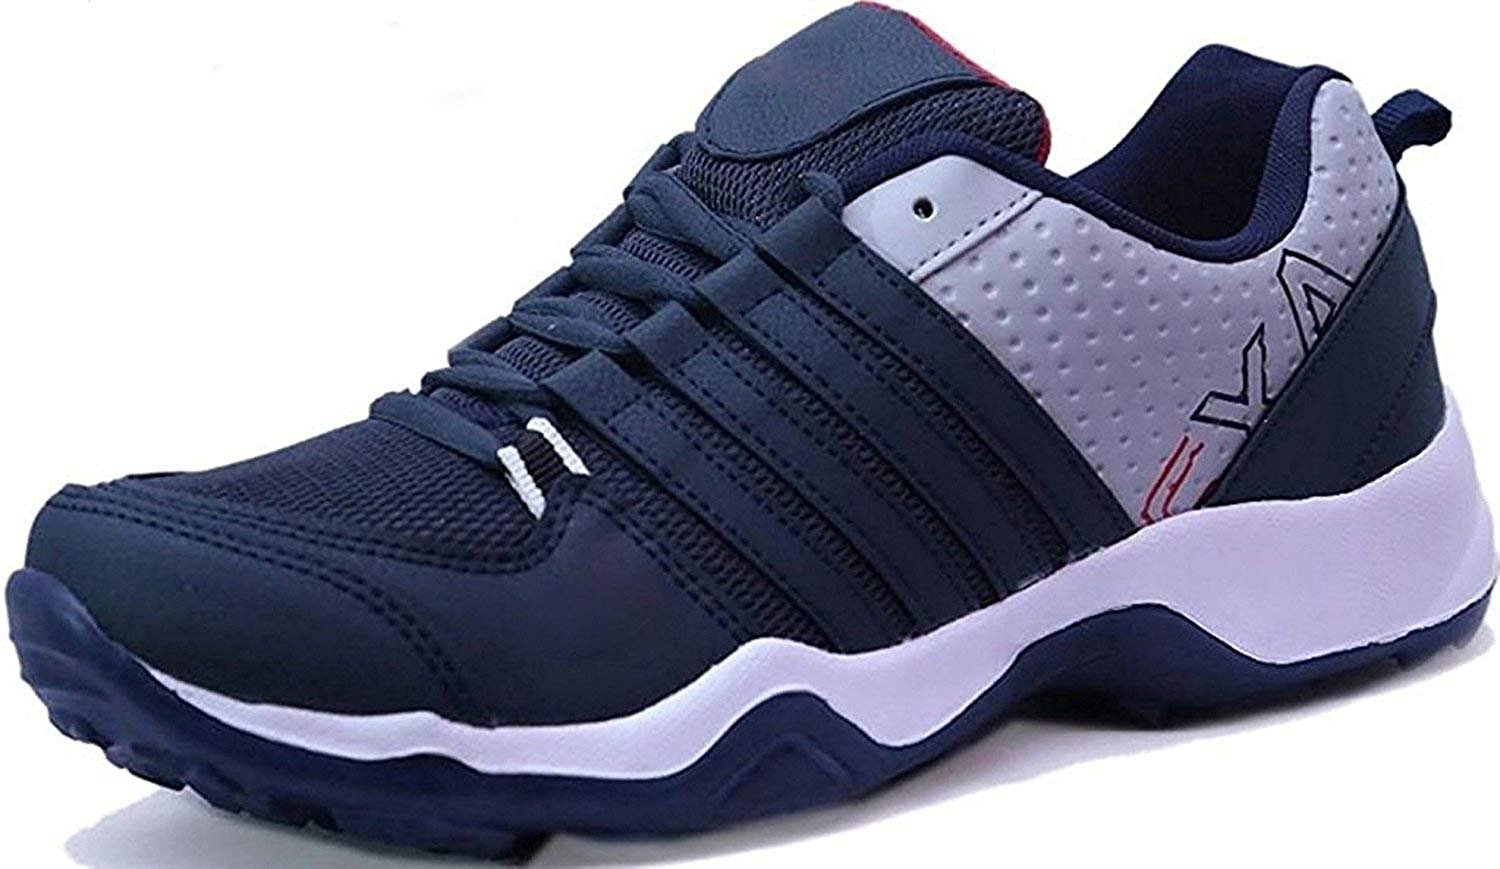 Parmish Verma navy blue sports shoes, Buy online on amazon